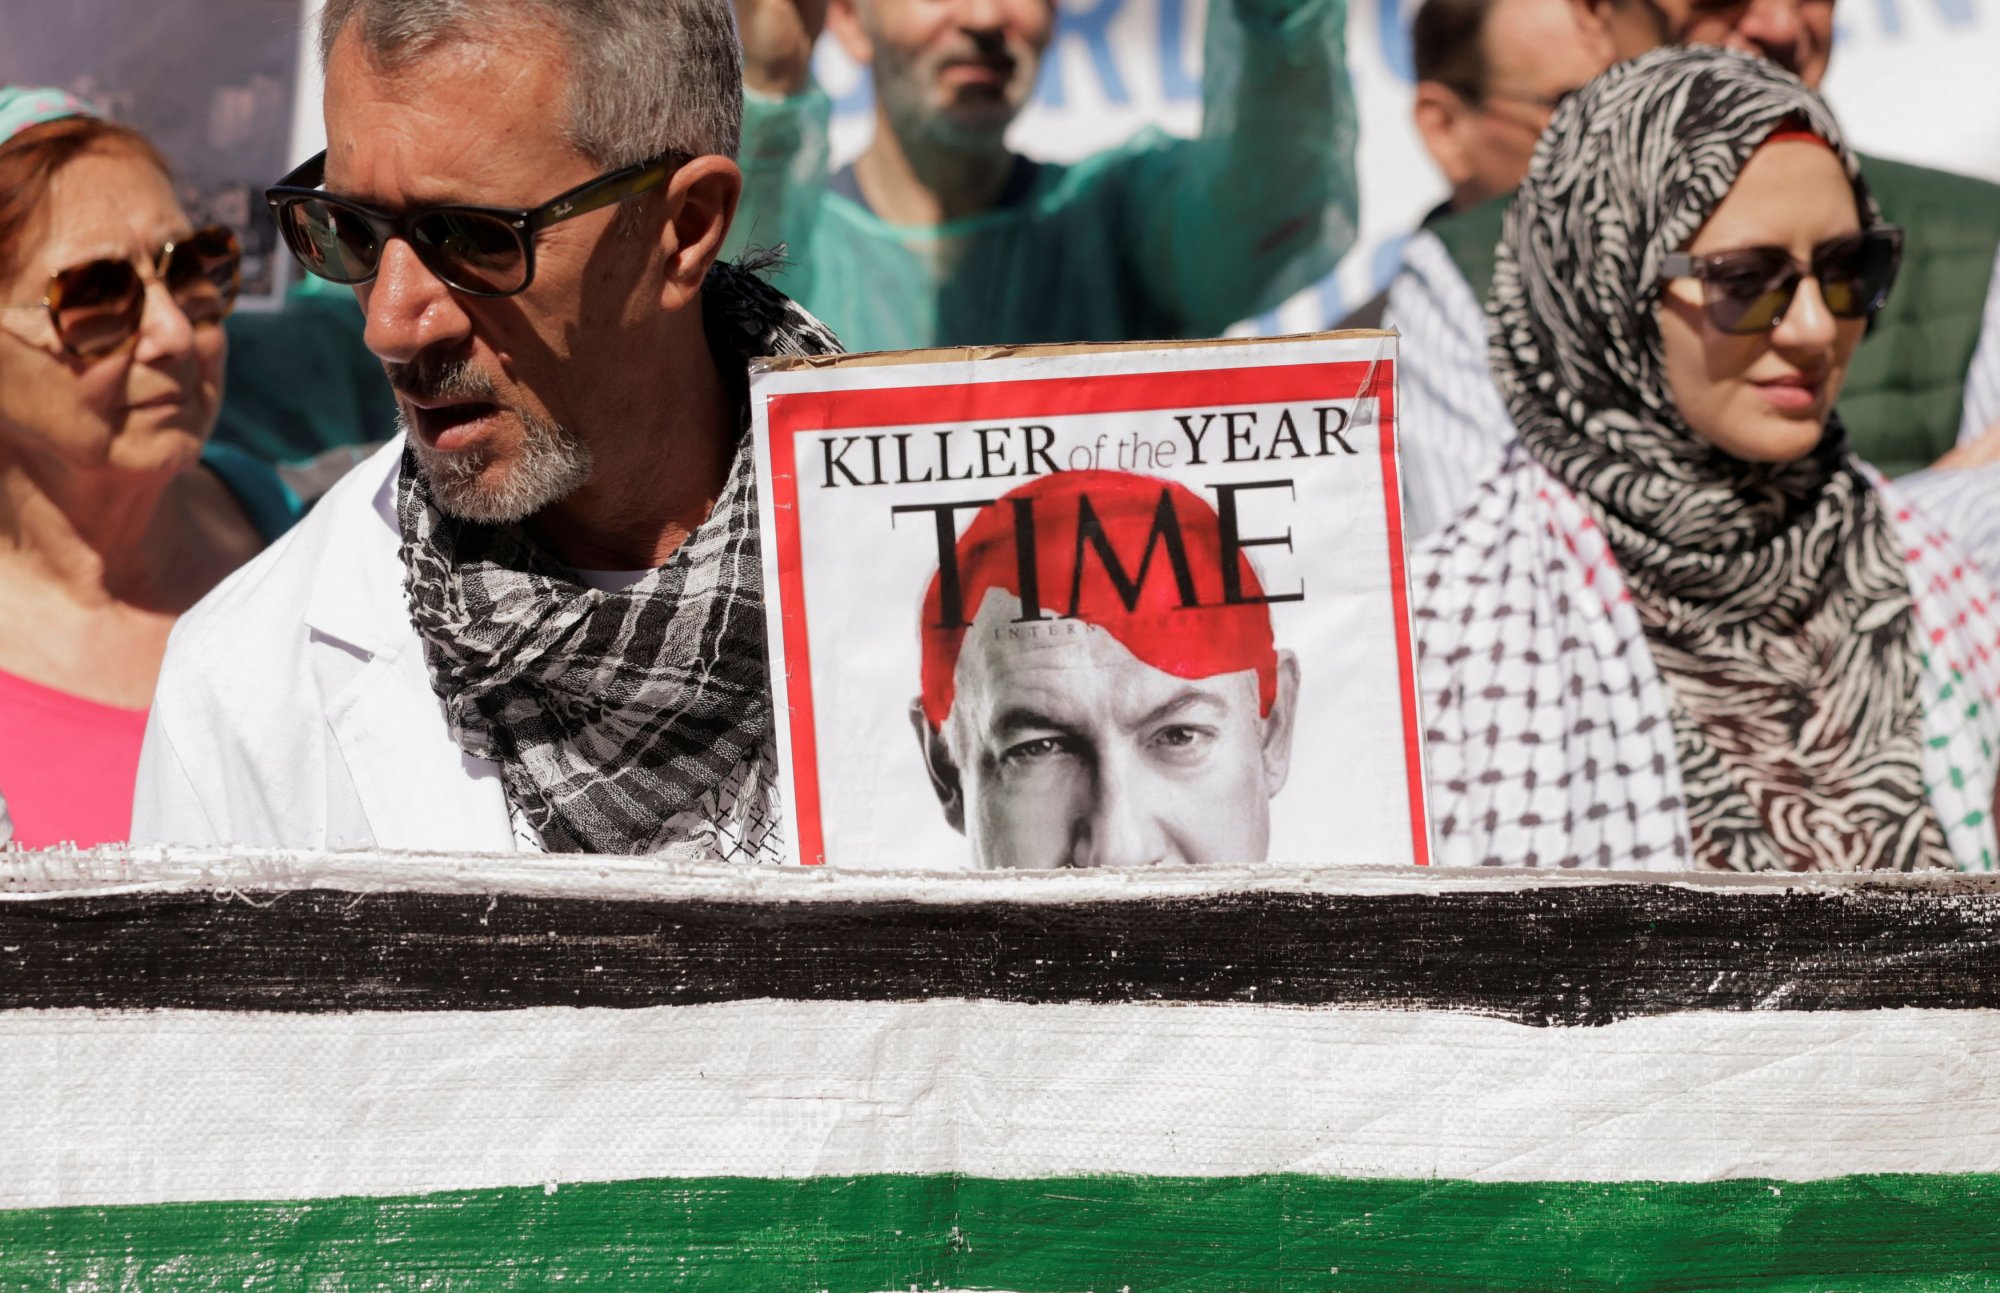 Live: Η συμφωνία εκεχειρίας θα έπρεπε να είναι «παιχνιδάκι» για τη Χαμάς, λέει ο Μπλίνκεν